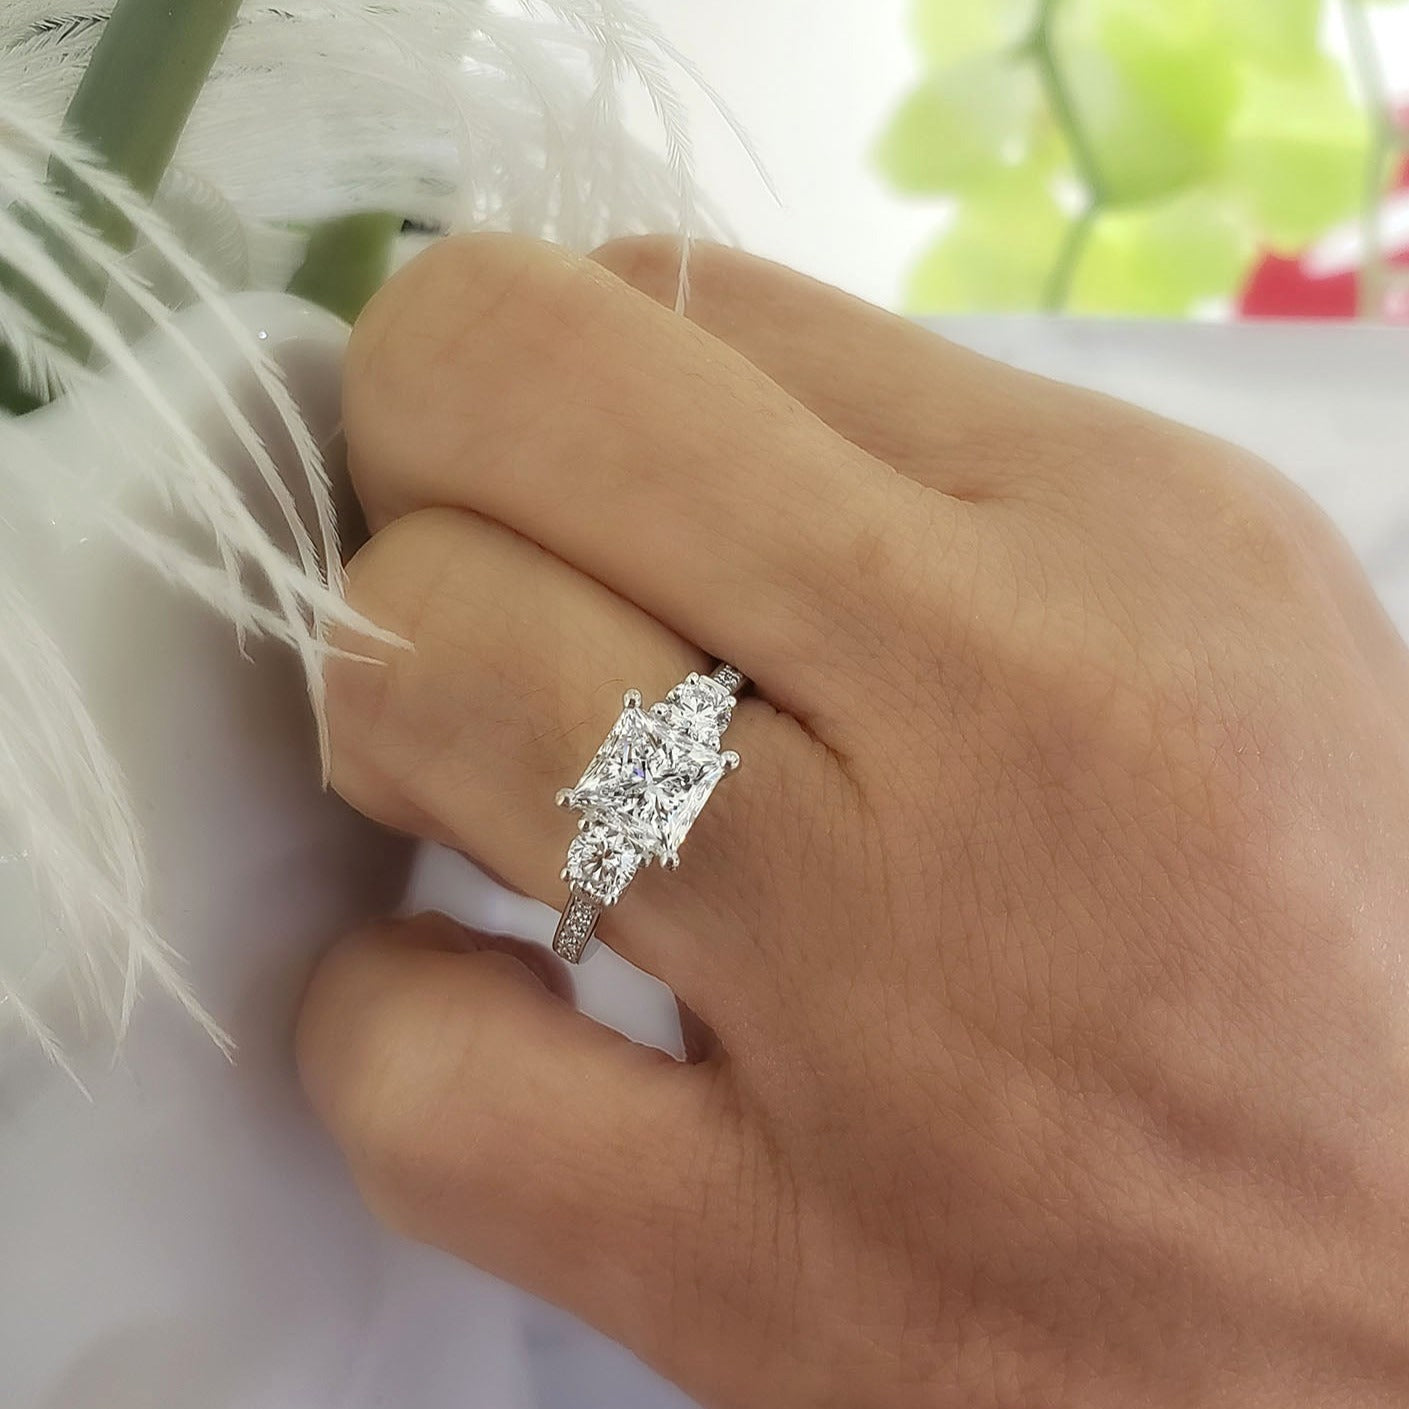 Top 10 Princess Cut Diamond Engagement Rings